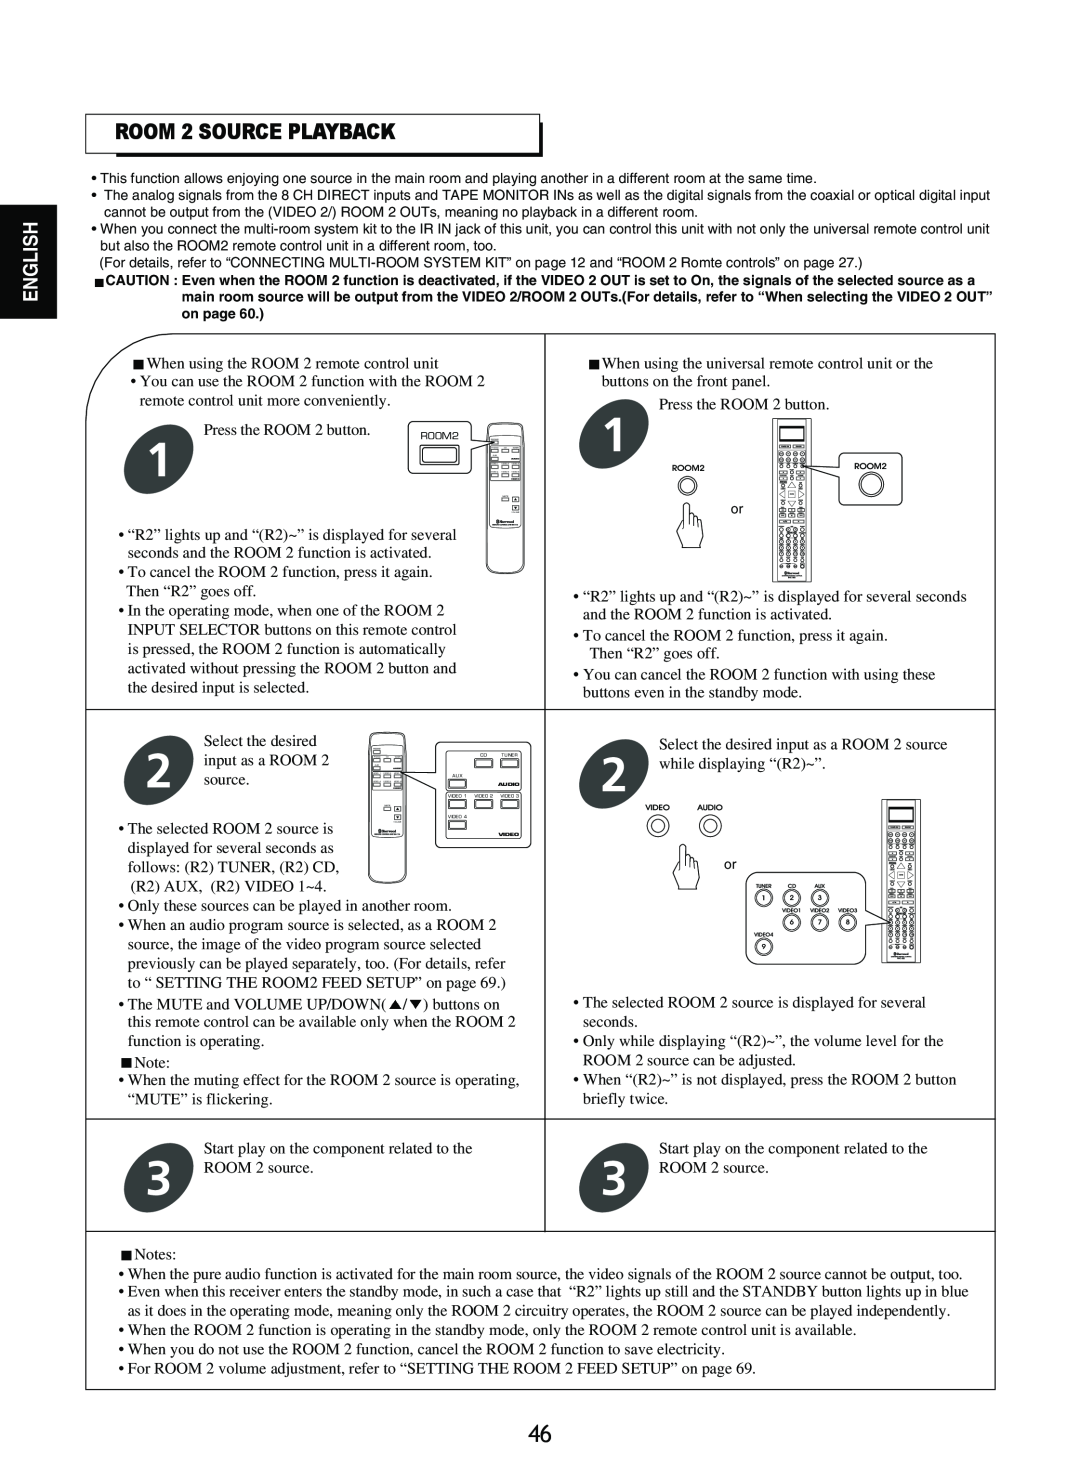 Sherwood R-865 manual ROOM 2 SOURCE PLAYBACK, English 